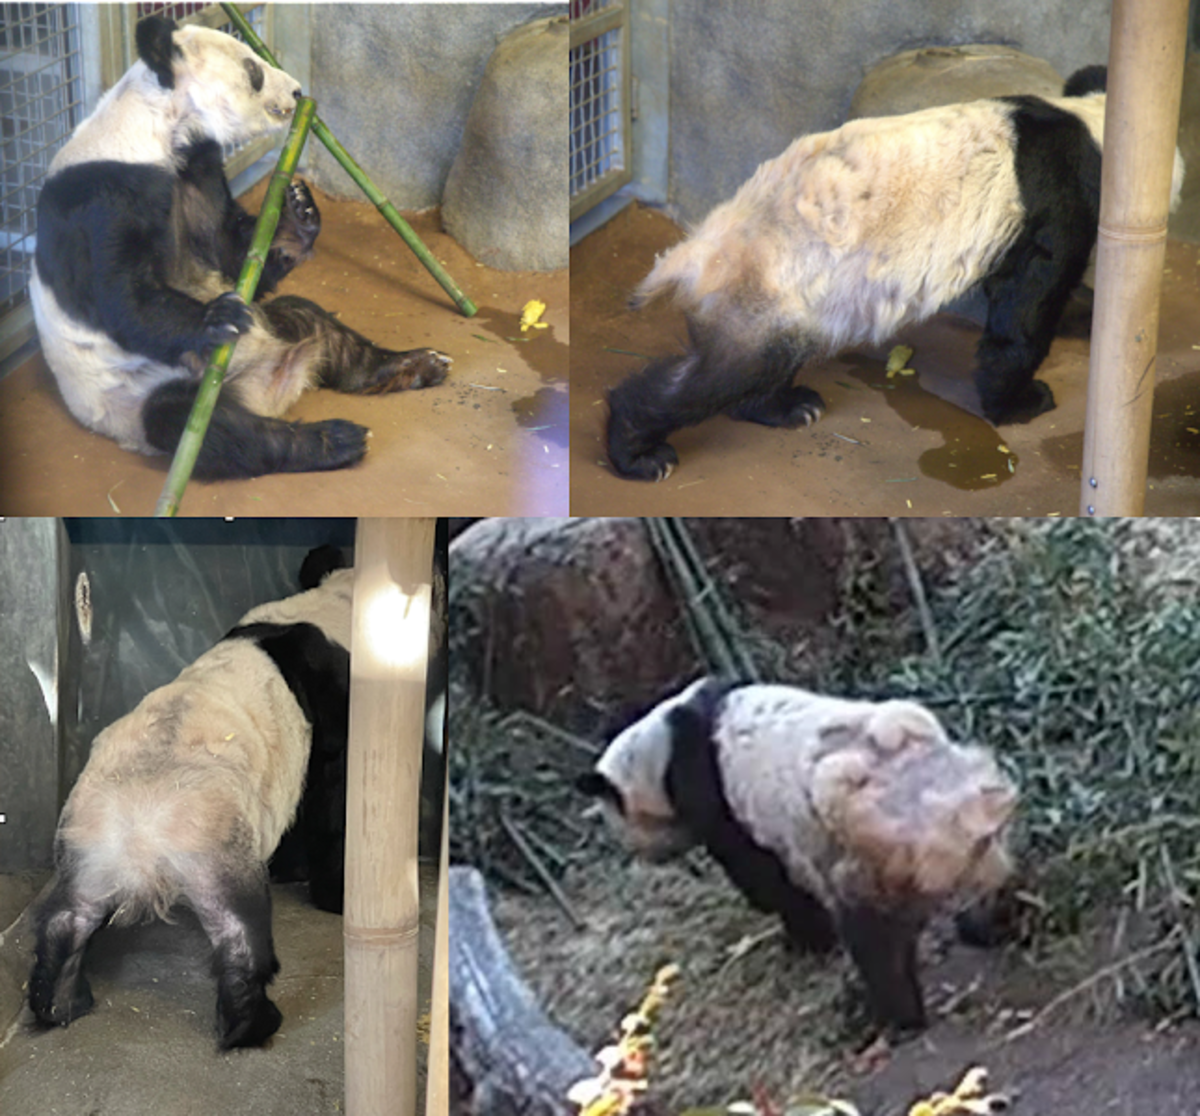 Female giant panda YaYa at the Memphis Zoo. Source: Panda Voices